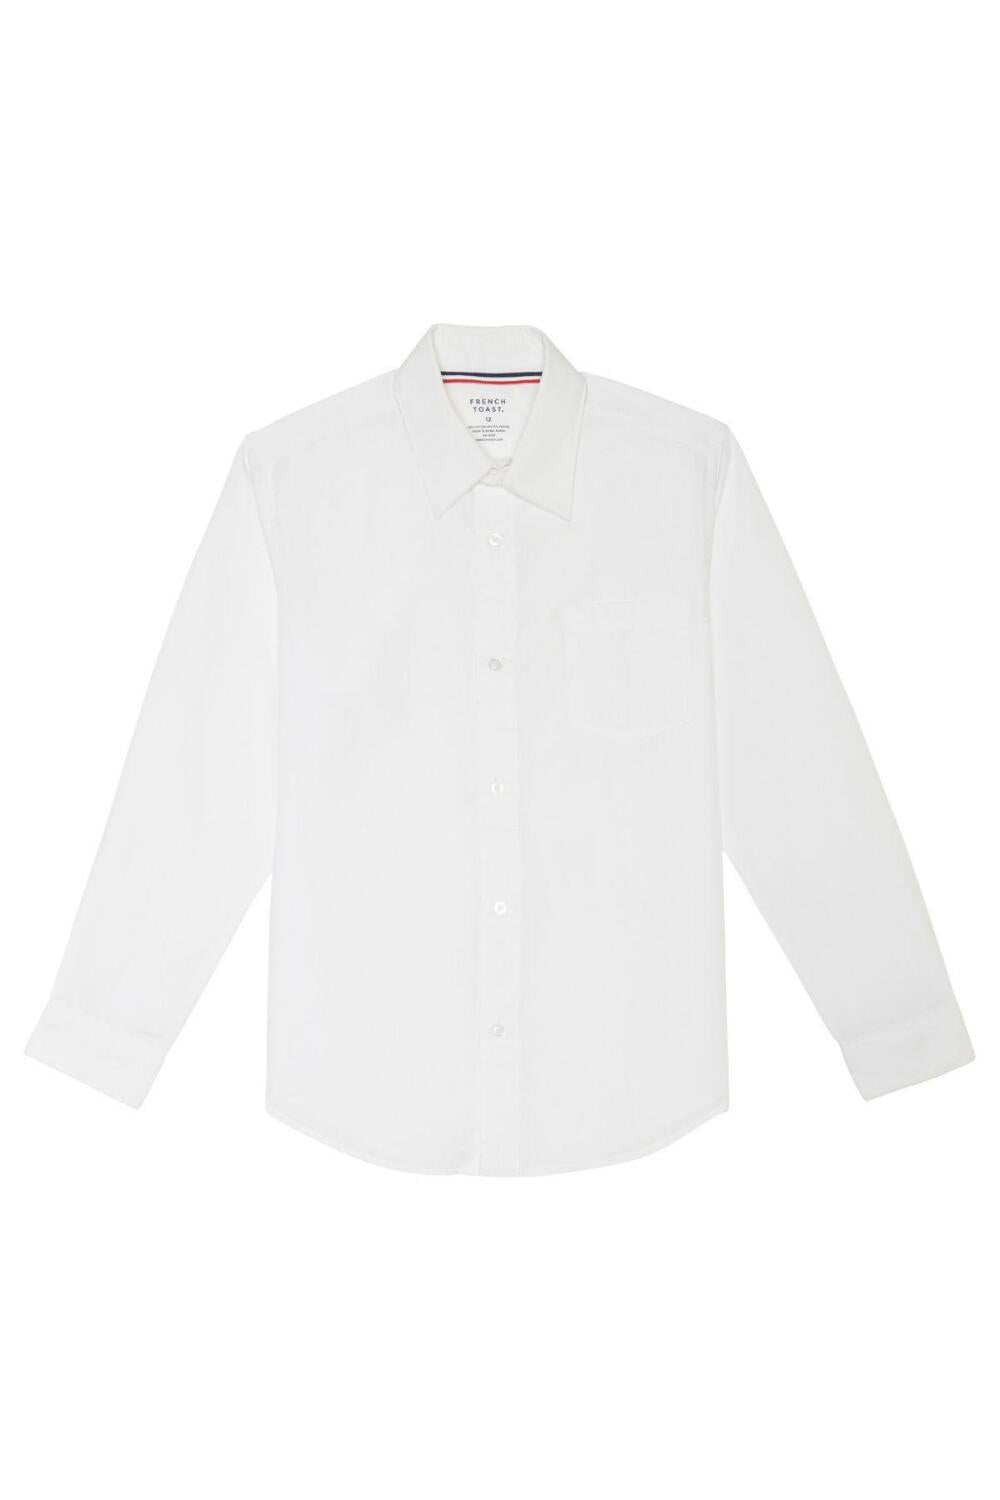 Boys Long Sleeve School Shirt | Youngland Schoolwear